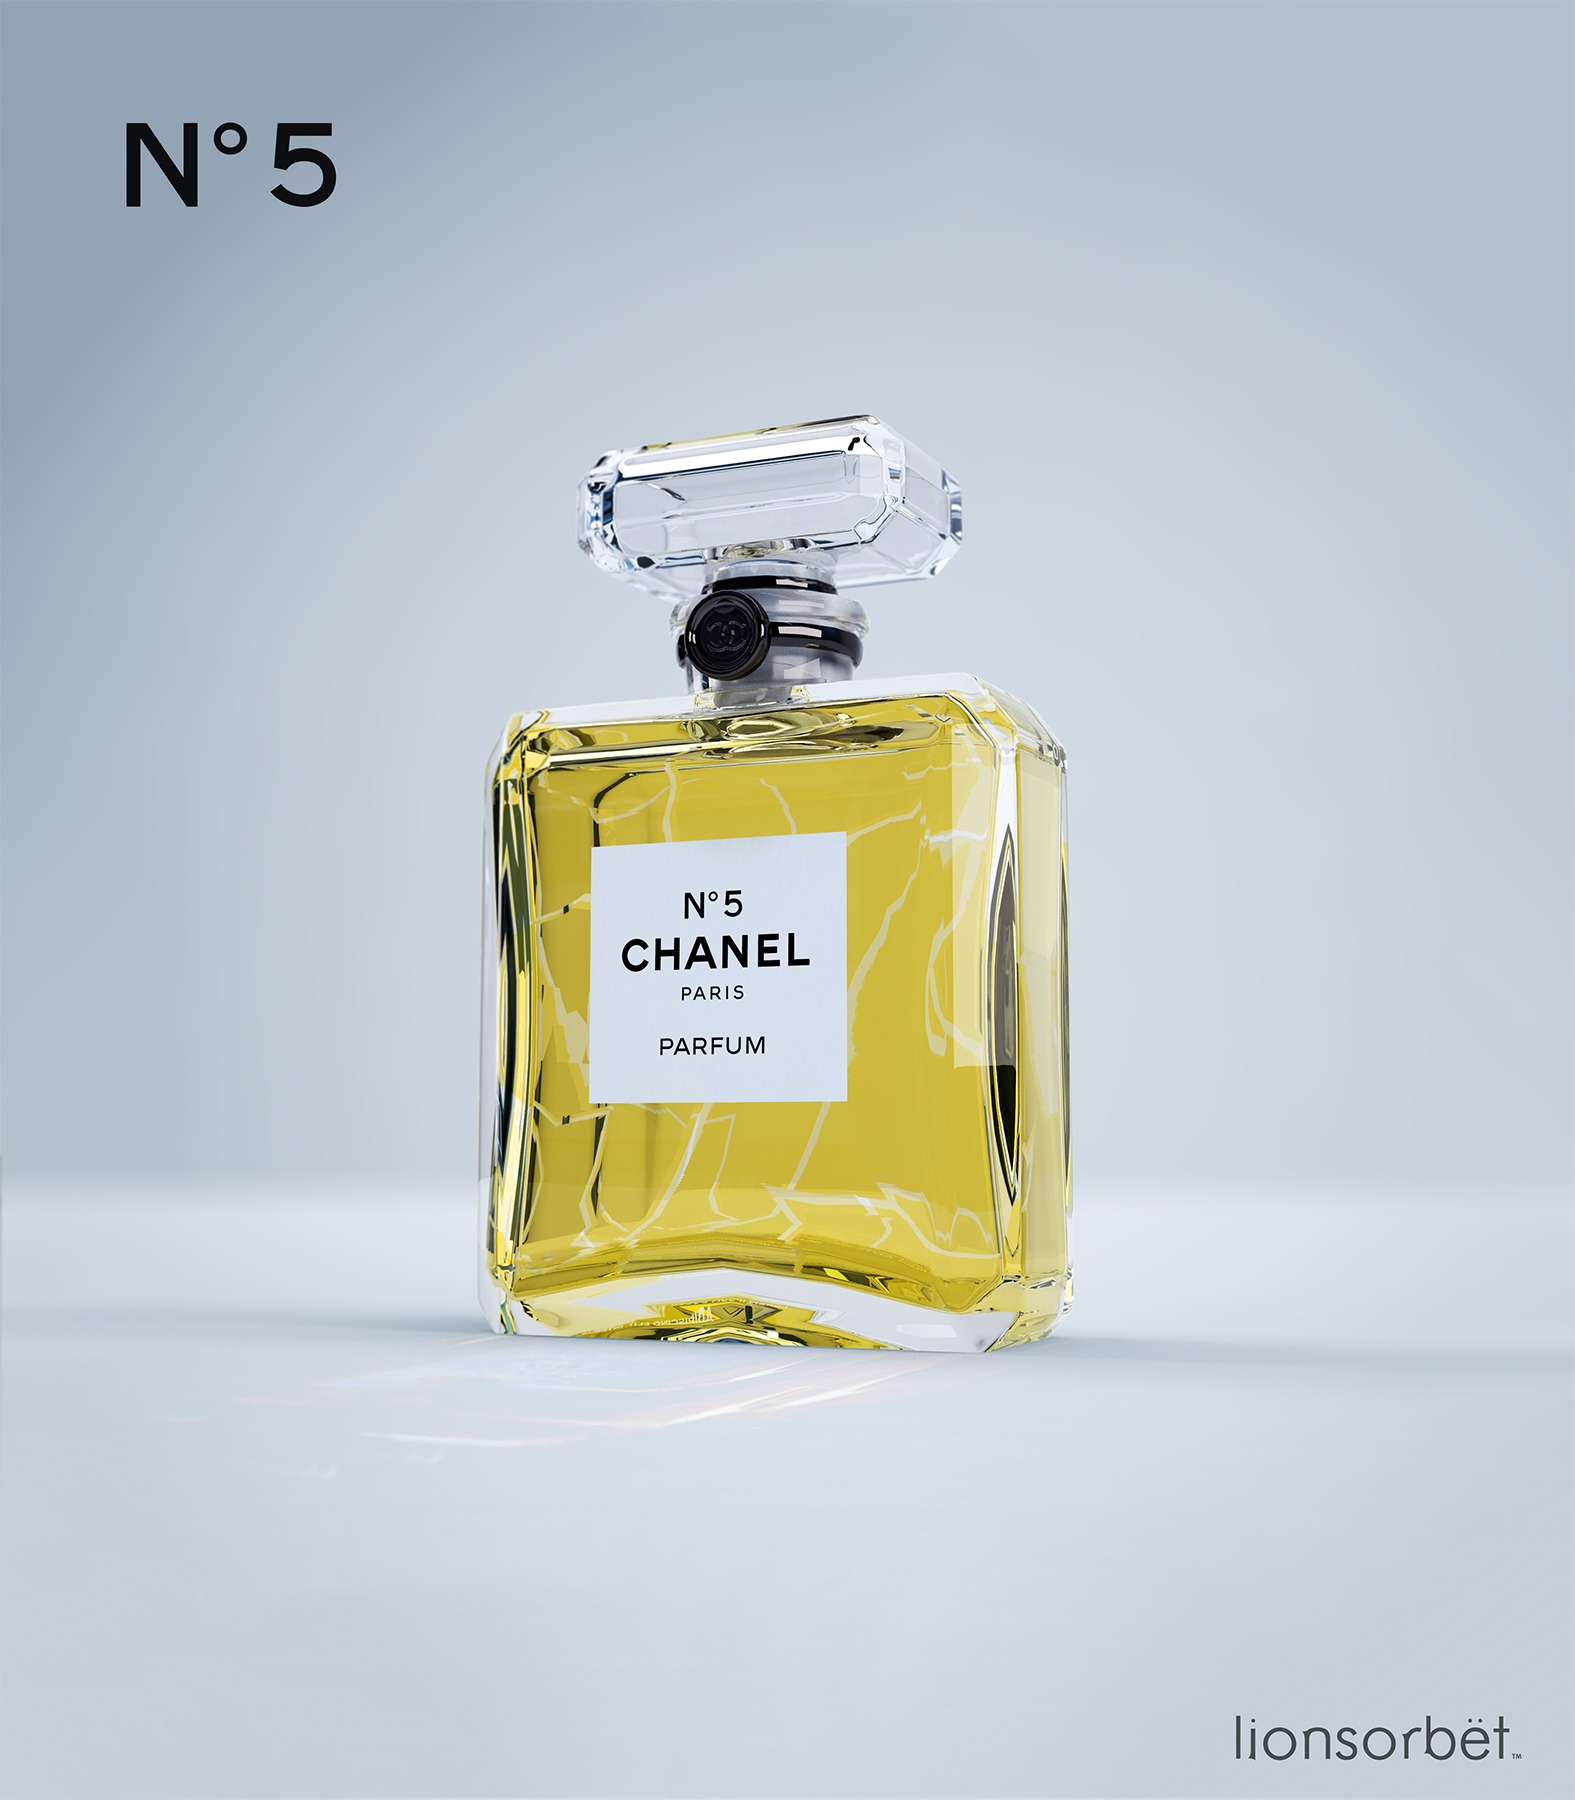 Chanel No5 L'eau Fragrance iconic bottle design, 3D render project Packaging  — Lionsorbet